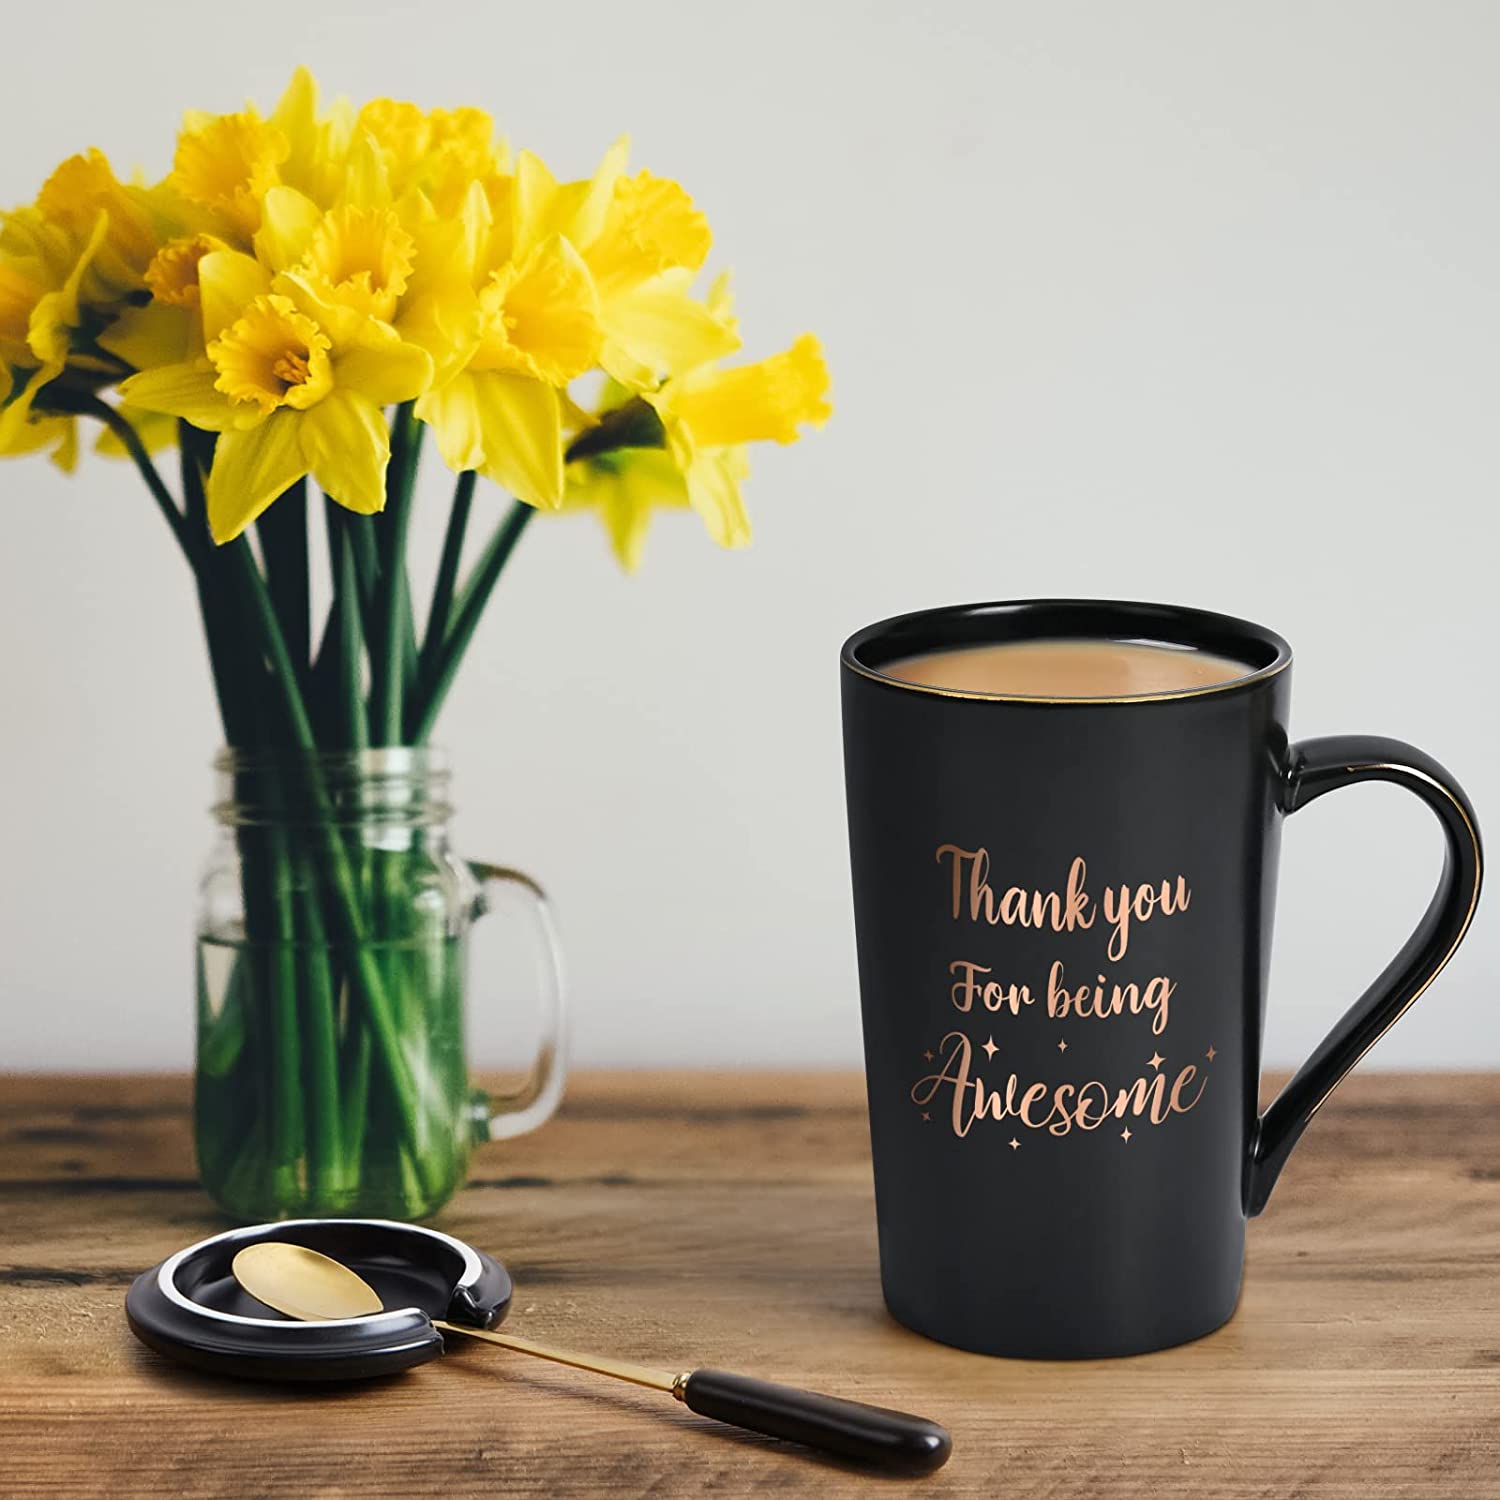 Futtumy Black 14 fl oz Coffee Mugs Ceramic Mug Tea Cup, Thank You for Being Awesome Mug, Inspirational Christmas Birthday Gifts for Men Women Friends, Thank You Gifts for Mug - image 4 of 10